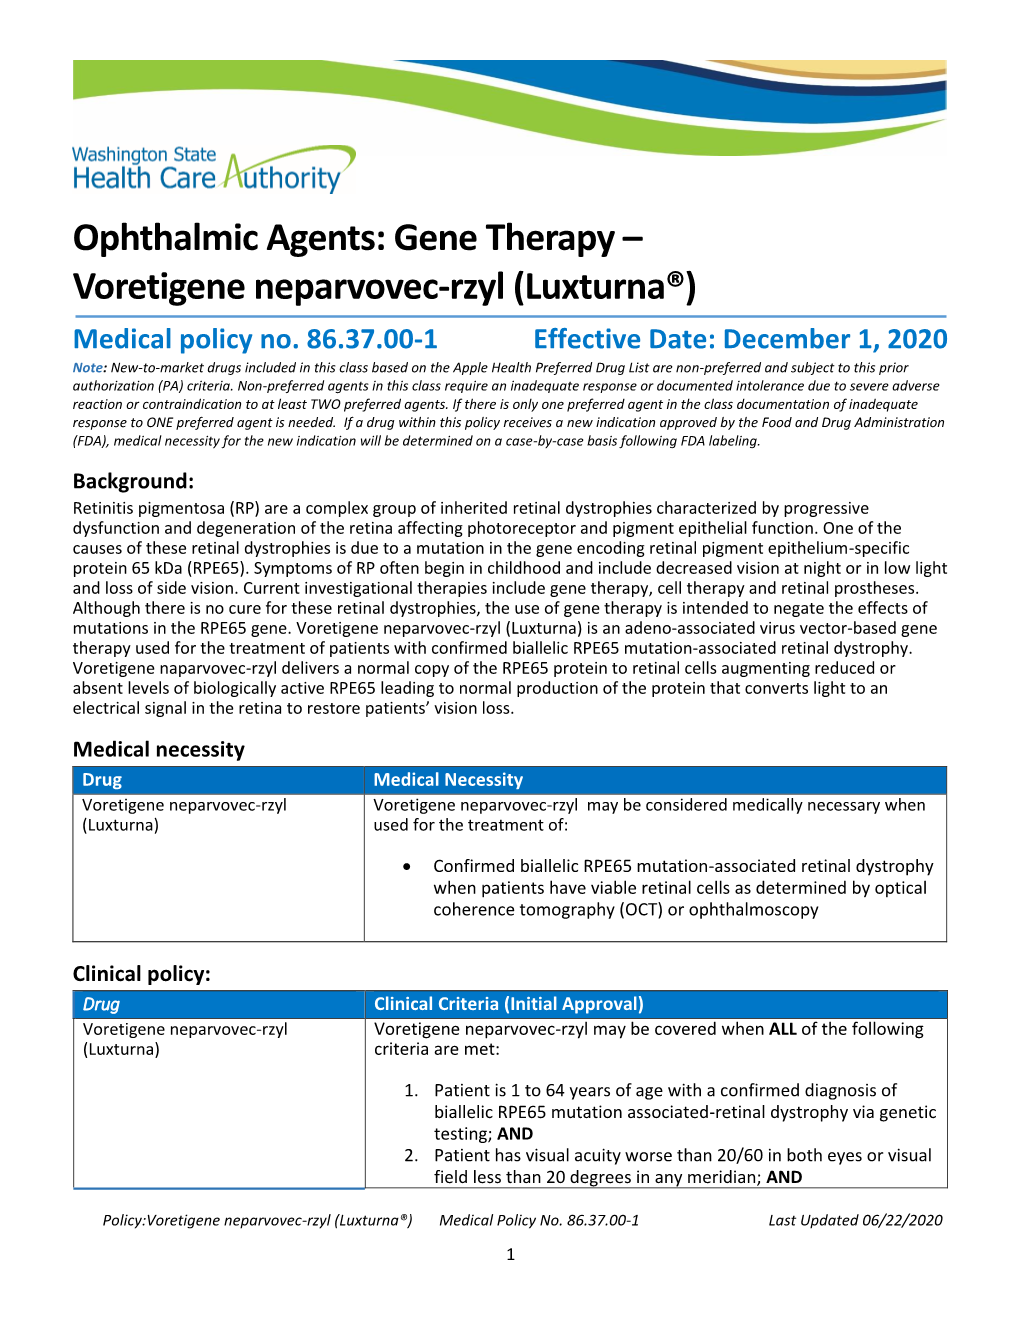 Ophthalmic Agents: Gene Therapy – Voretigene Neparvovec-Rzyl (Luxturna®) Medical Policy No